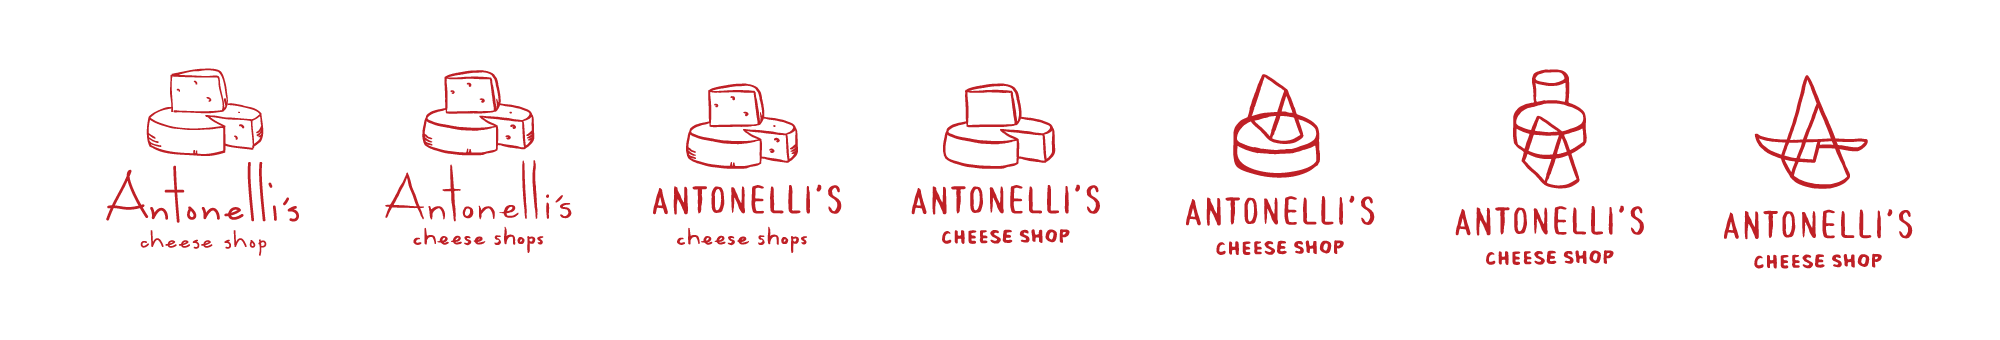 Antonelli's Logo Evolution